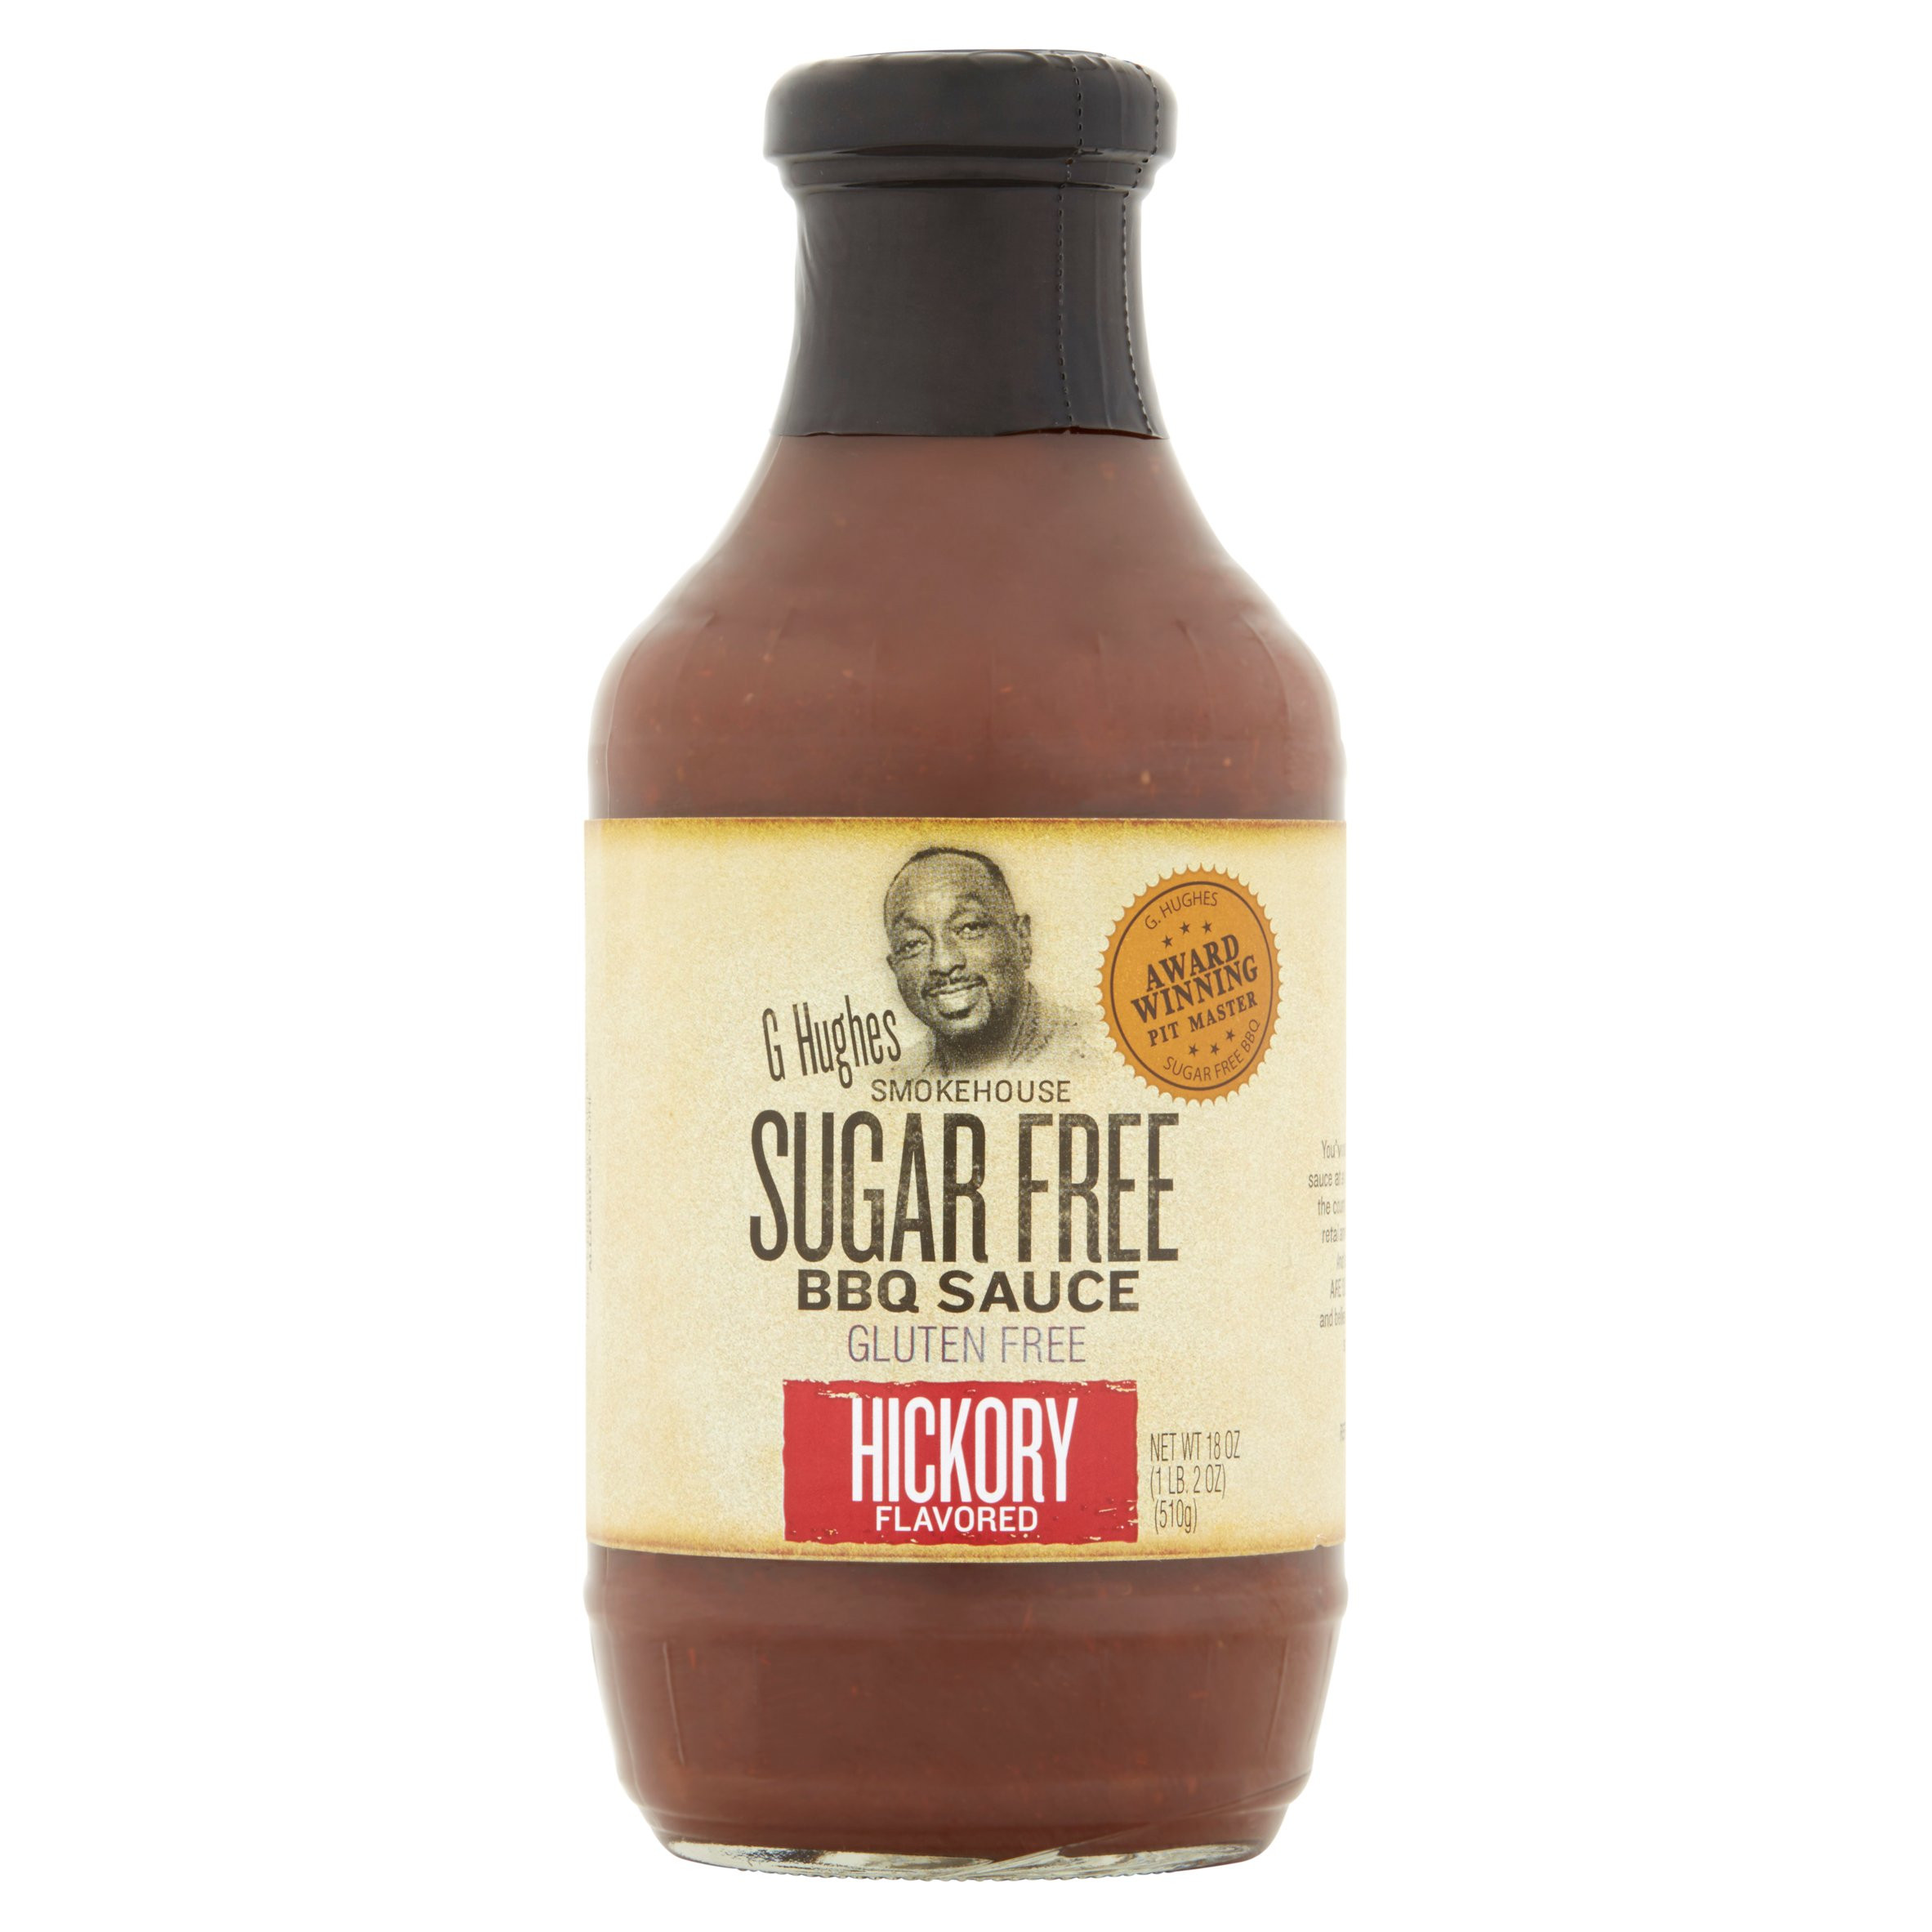 G Hughes Sugar Free Bbq Sauce
 low sugar bbq sauce kc masterpiece